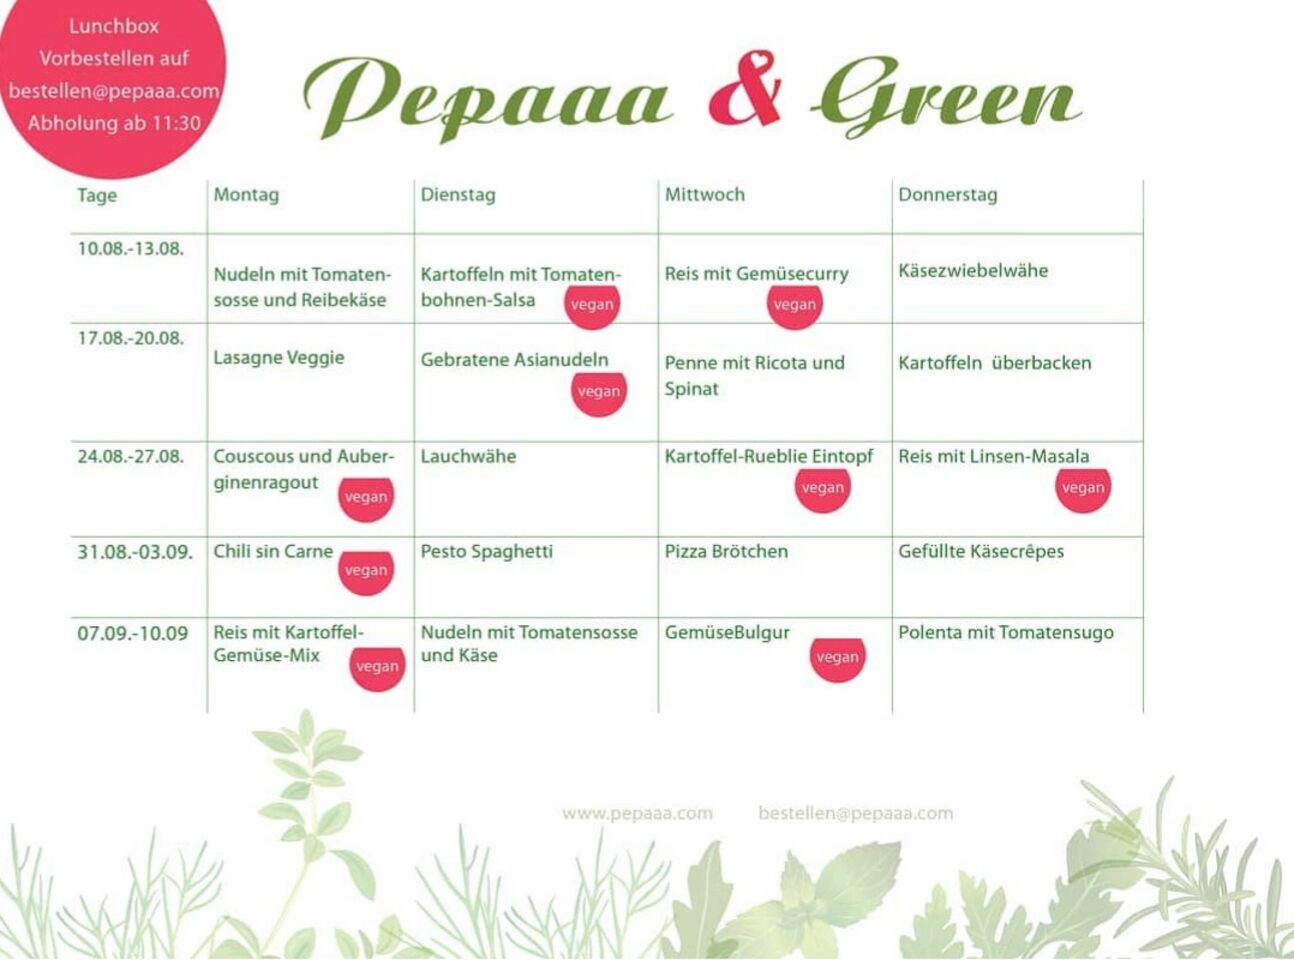 A photo of Pepaaa & Green